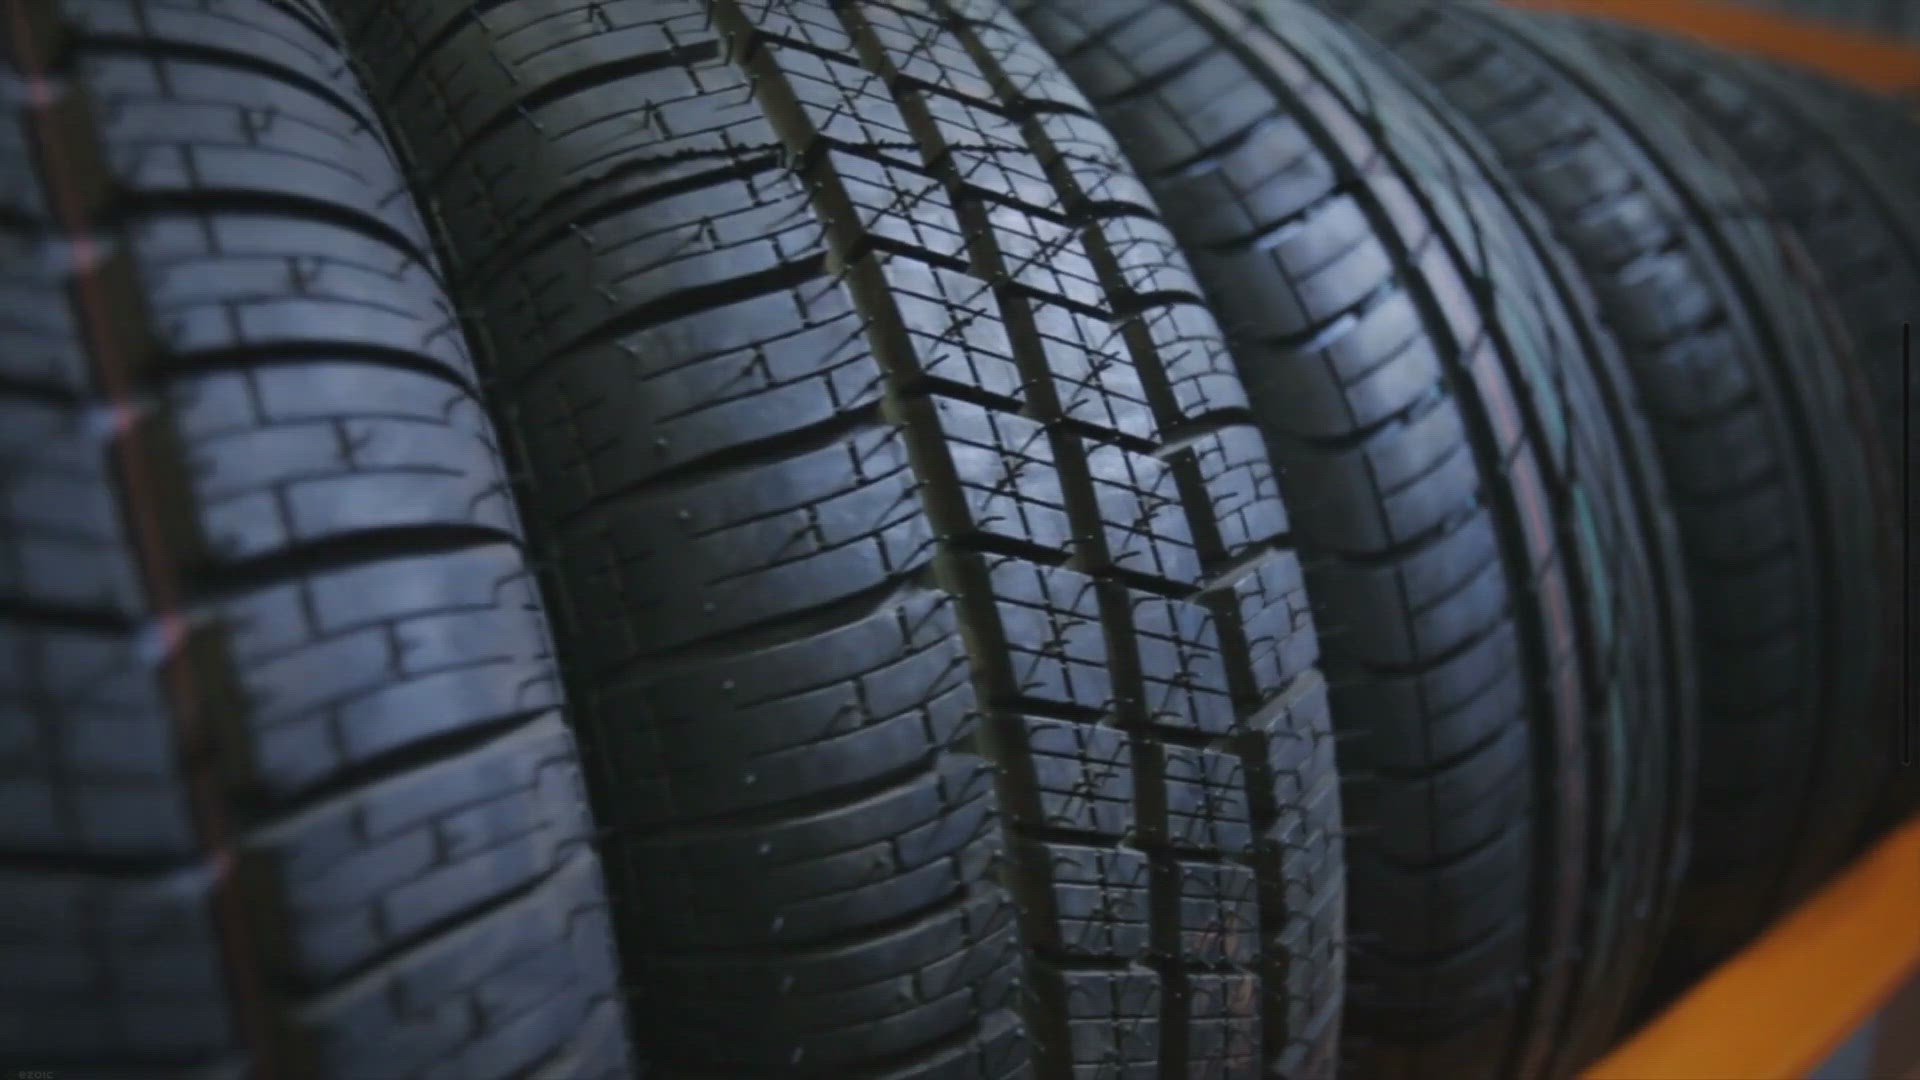 Reviewed: Bontrager GR1 Team Issue Gravel Tire 700 x 40mm, 35mm